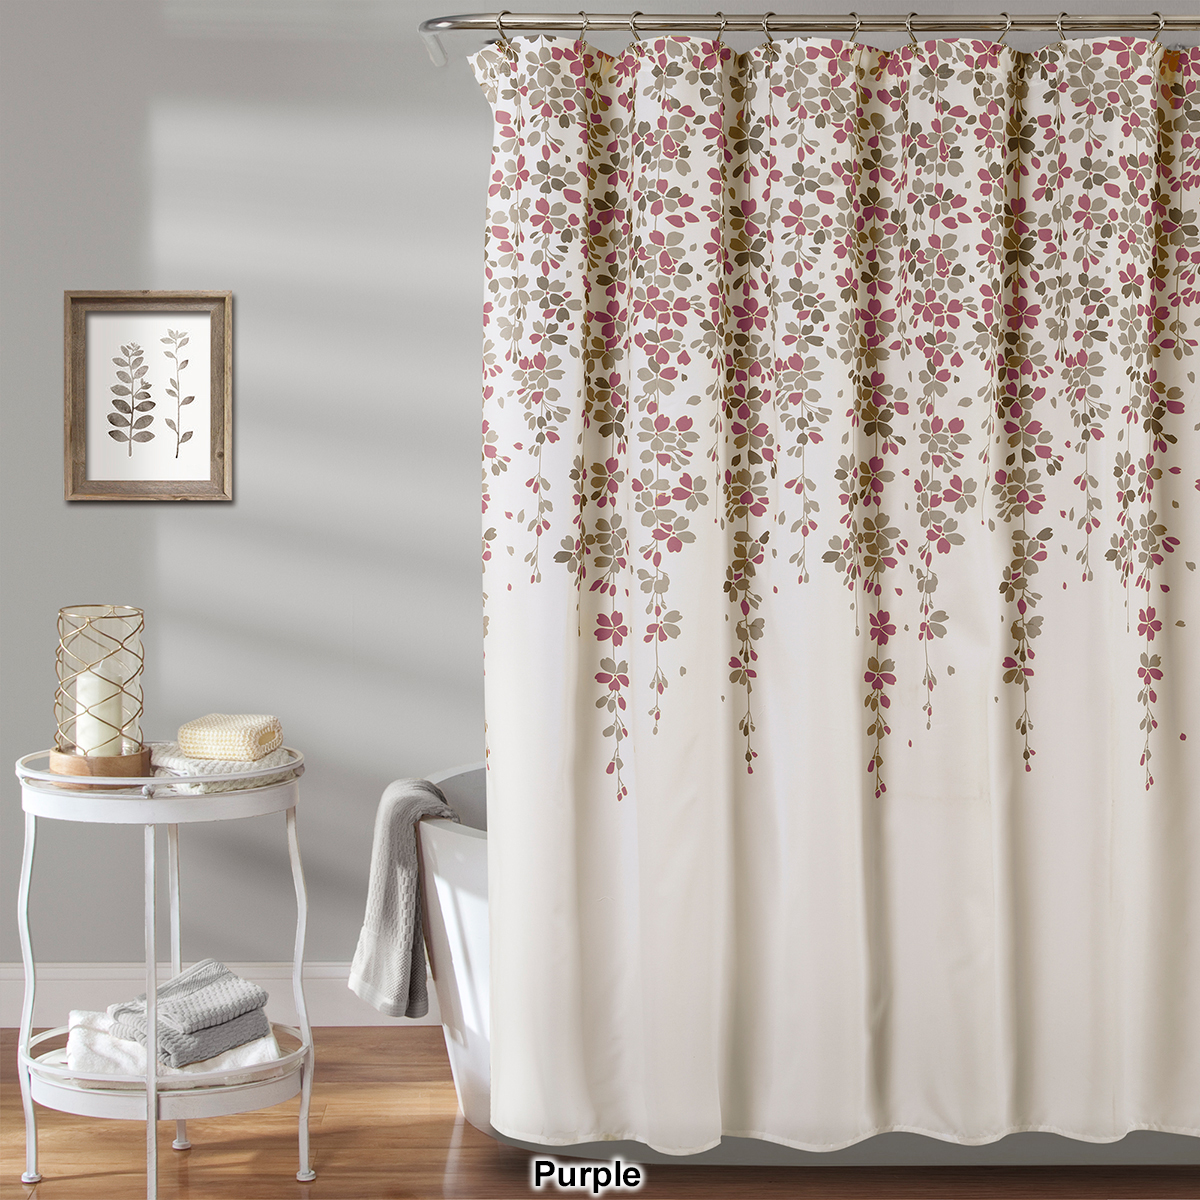 Lush Decor(R) Weeping Flower Shower Curtain